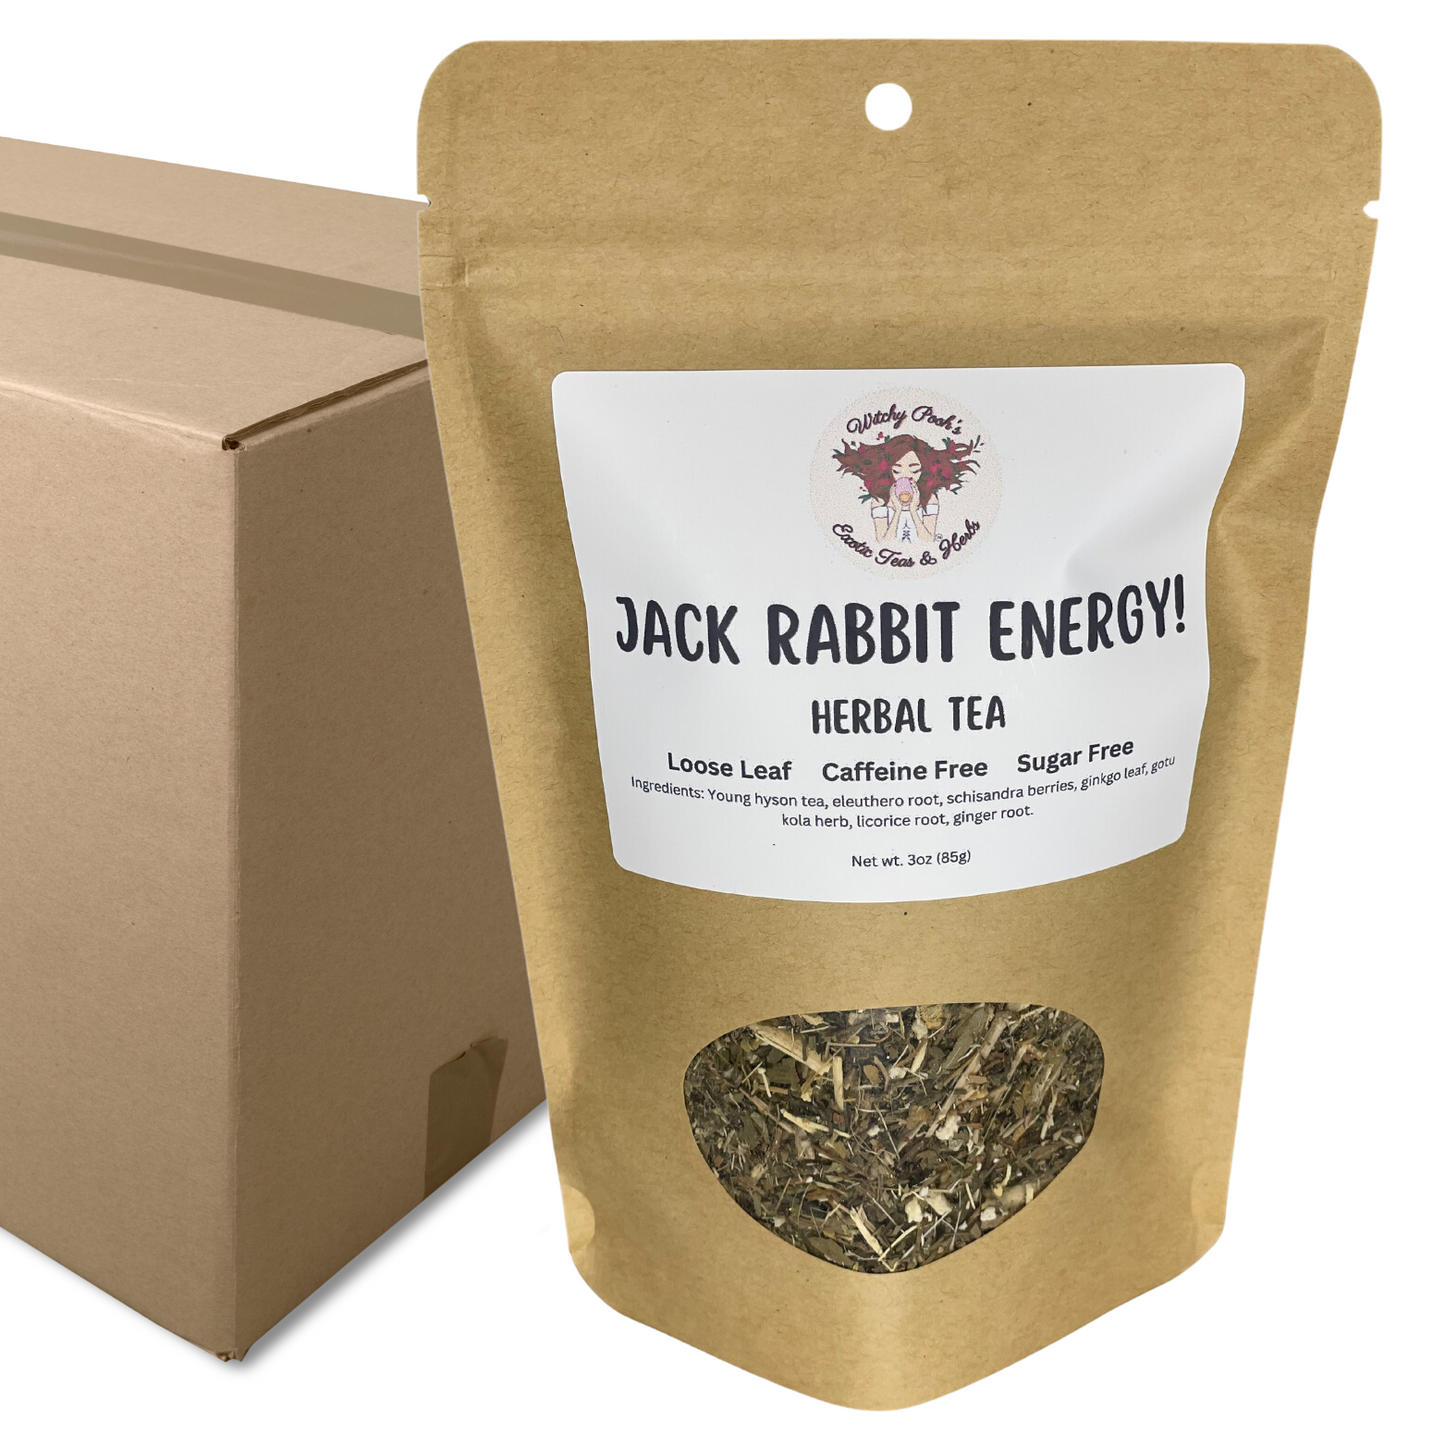 Witchy Pooh's Jack Rabbit Energy! Loose Leaf Functional Herbal Tea, Caffeine Free, Sugar Free Energy Drink